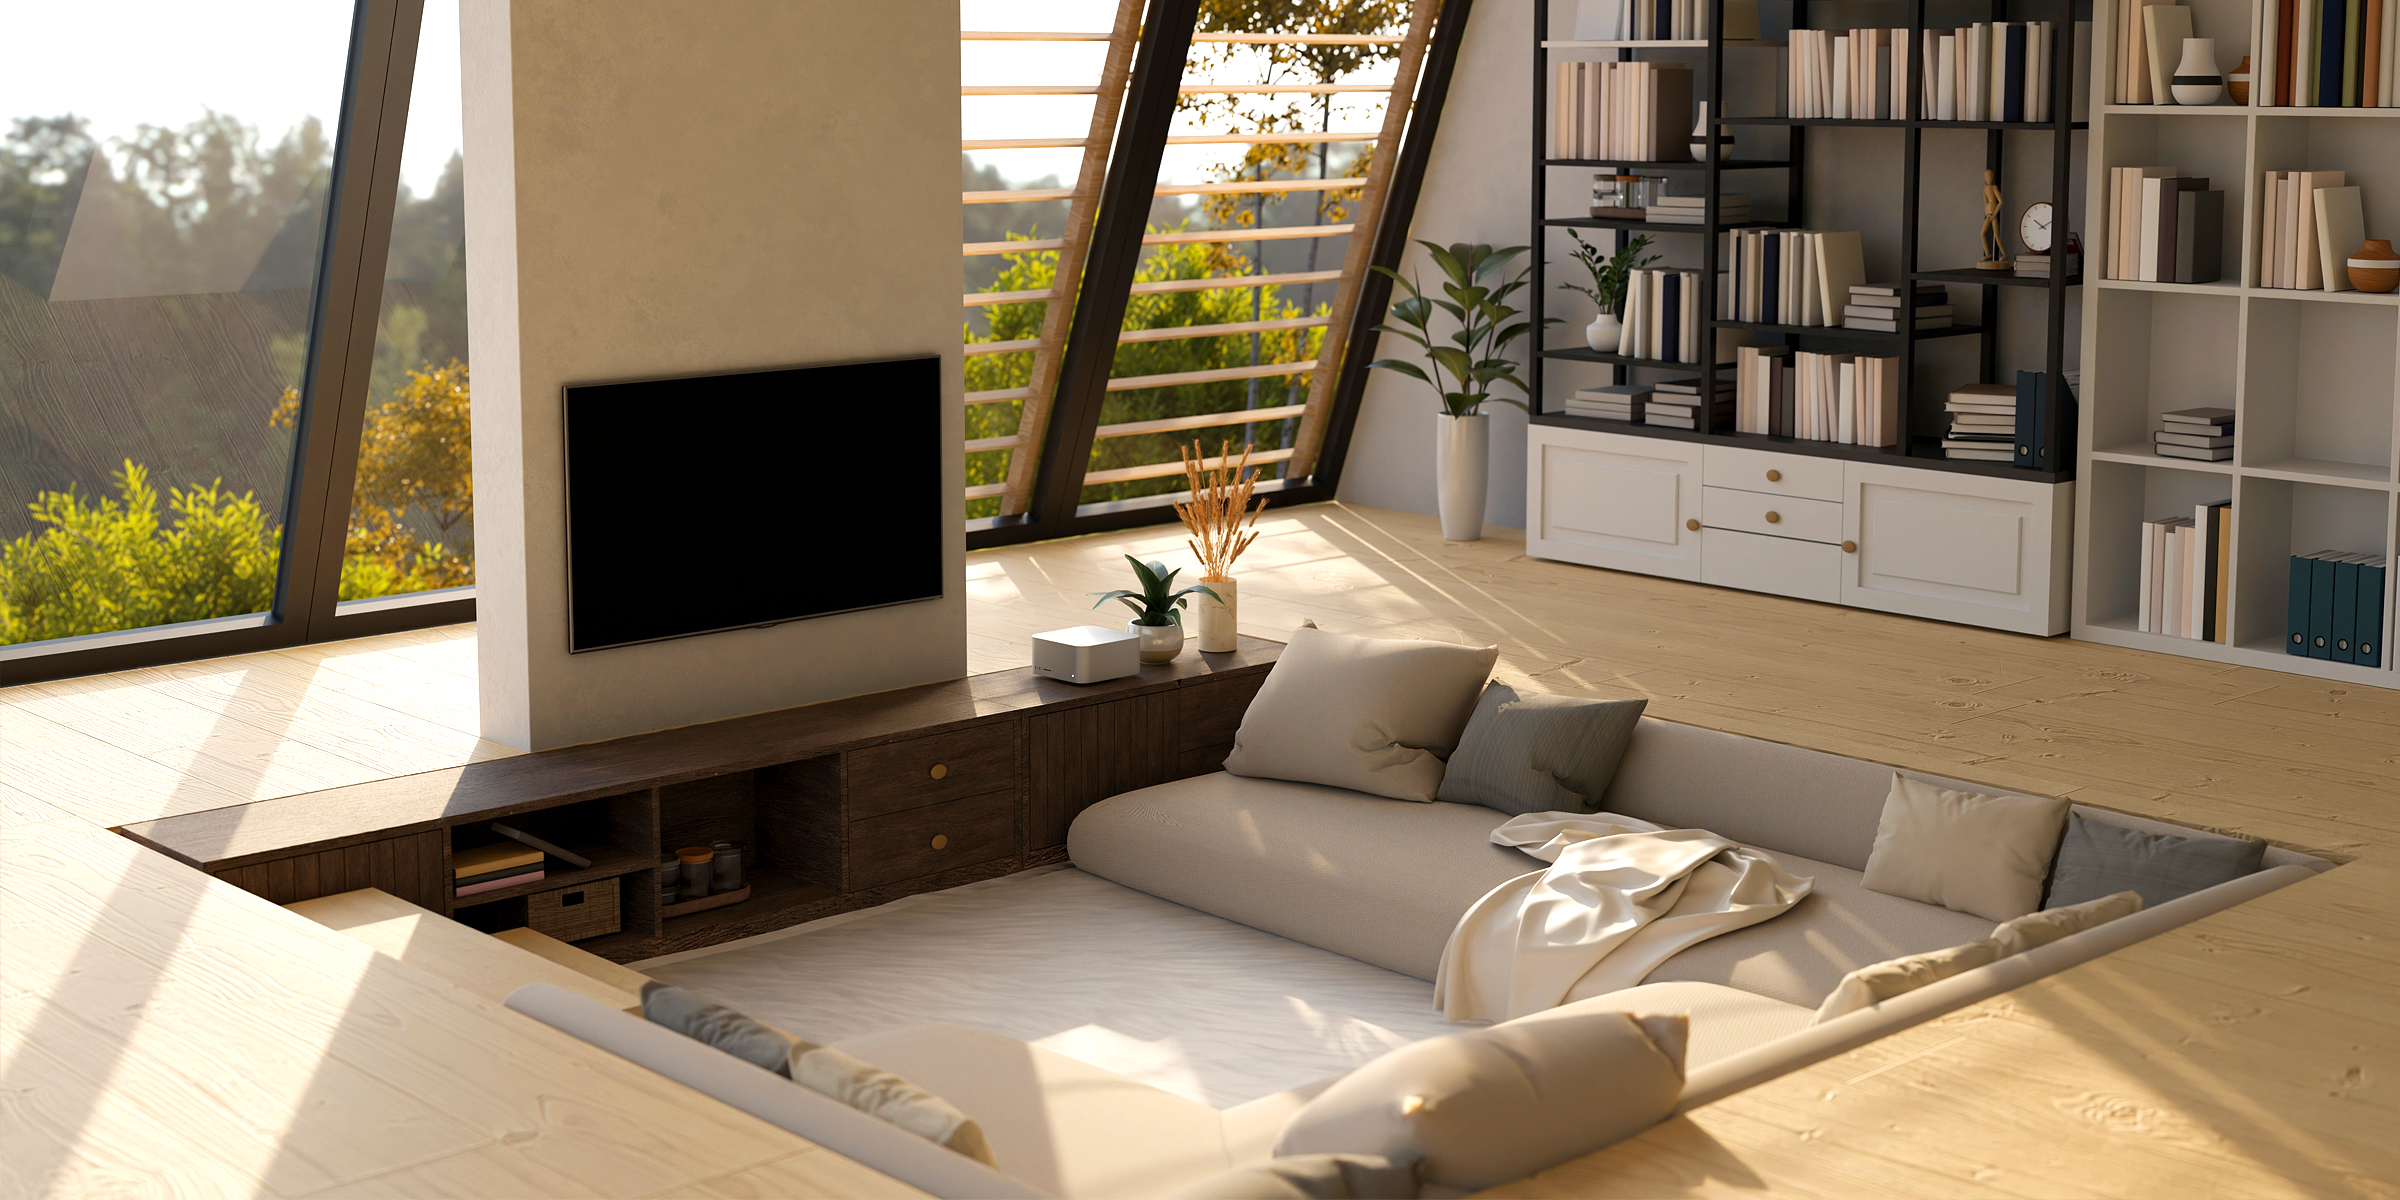 A sunken living room | Source: Shutterstock